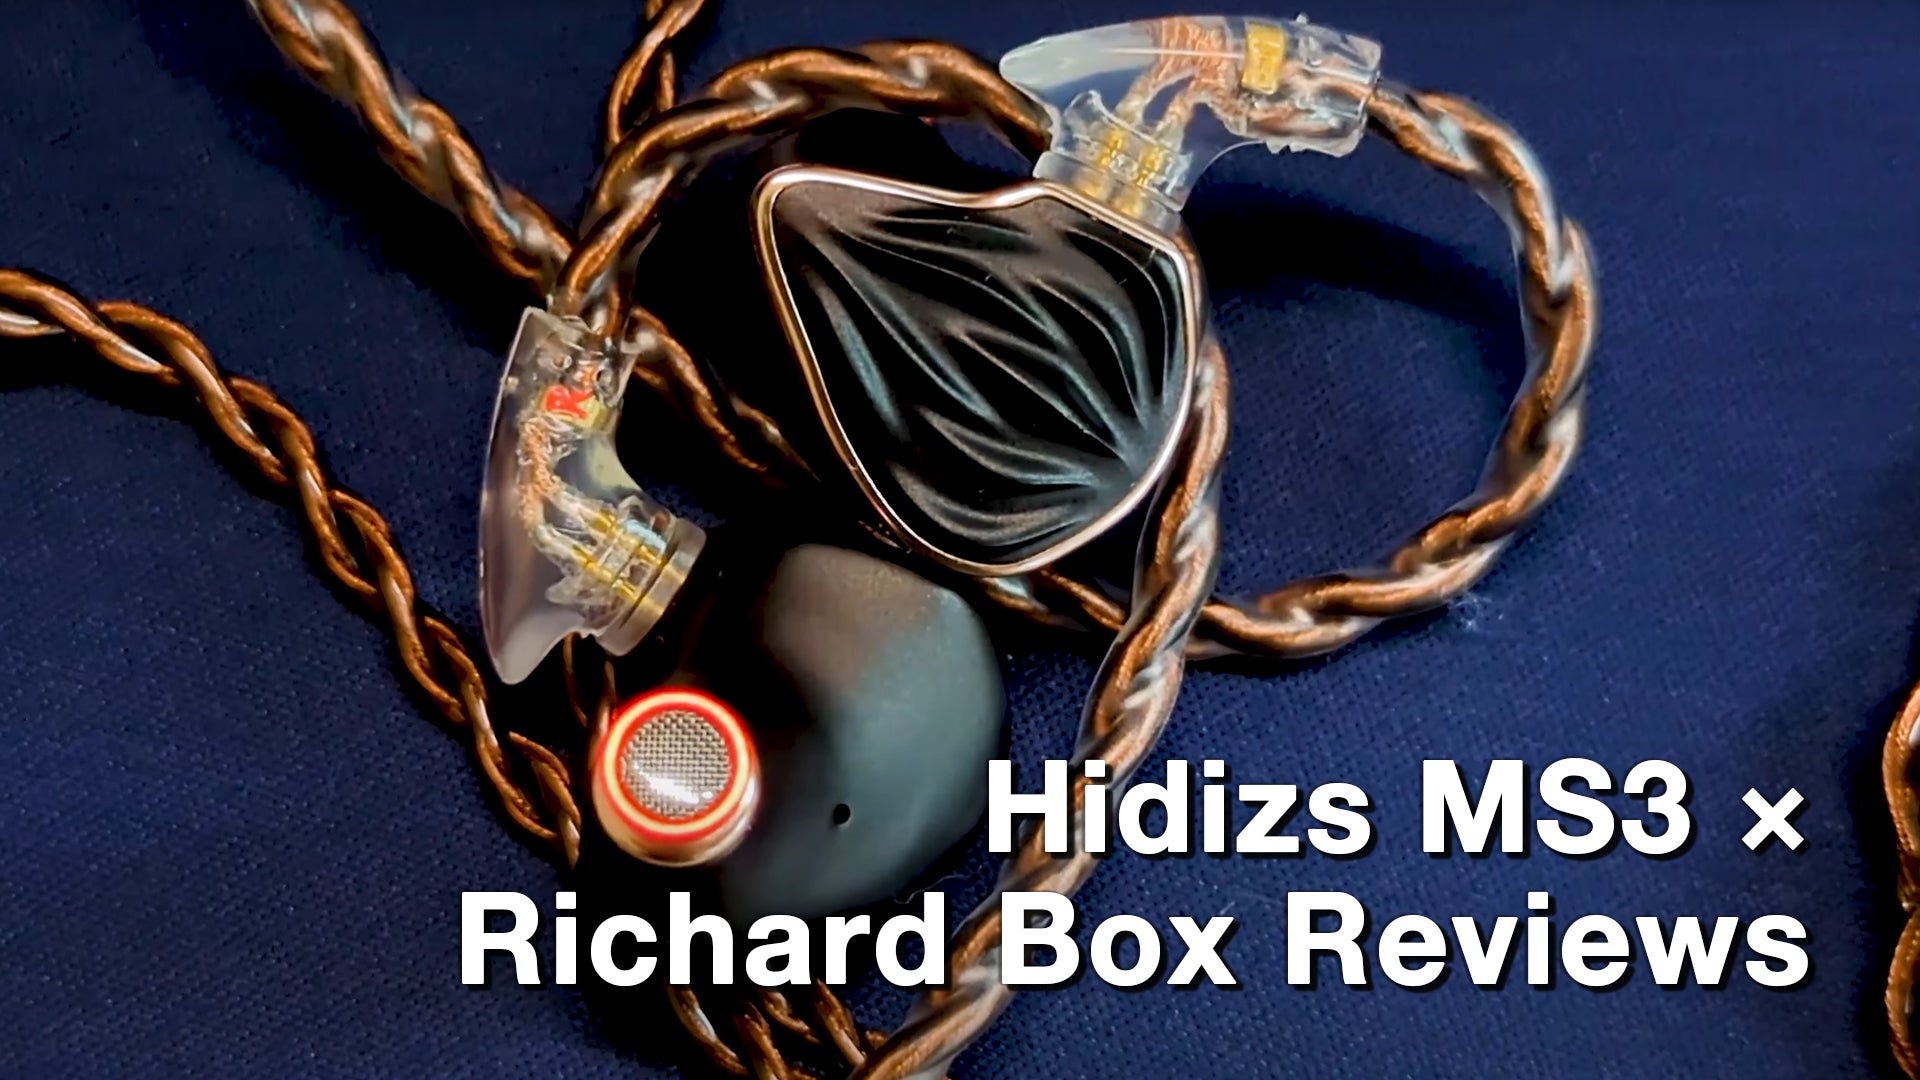 Hidizs MS3 Review -  Richard Box Reviews